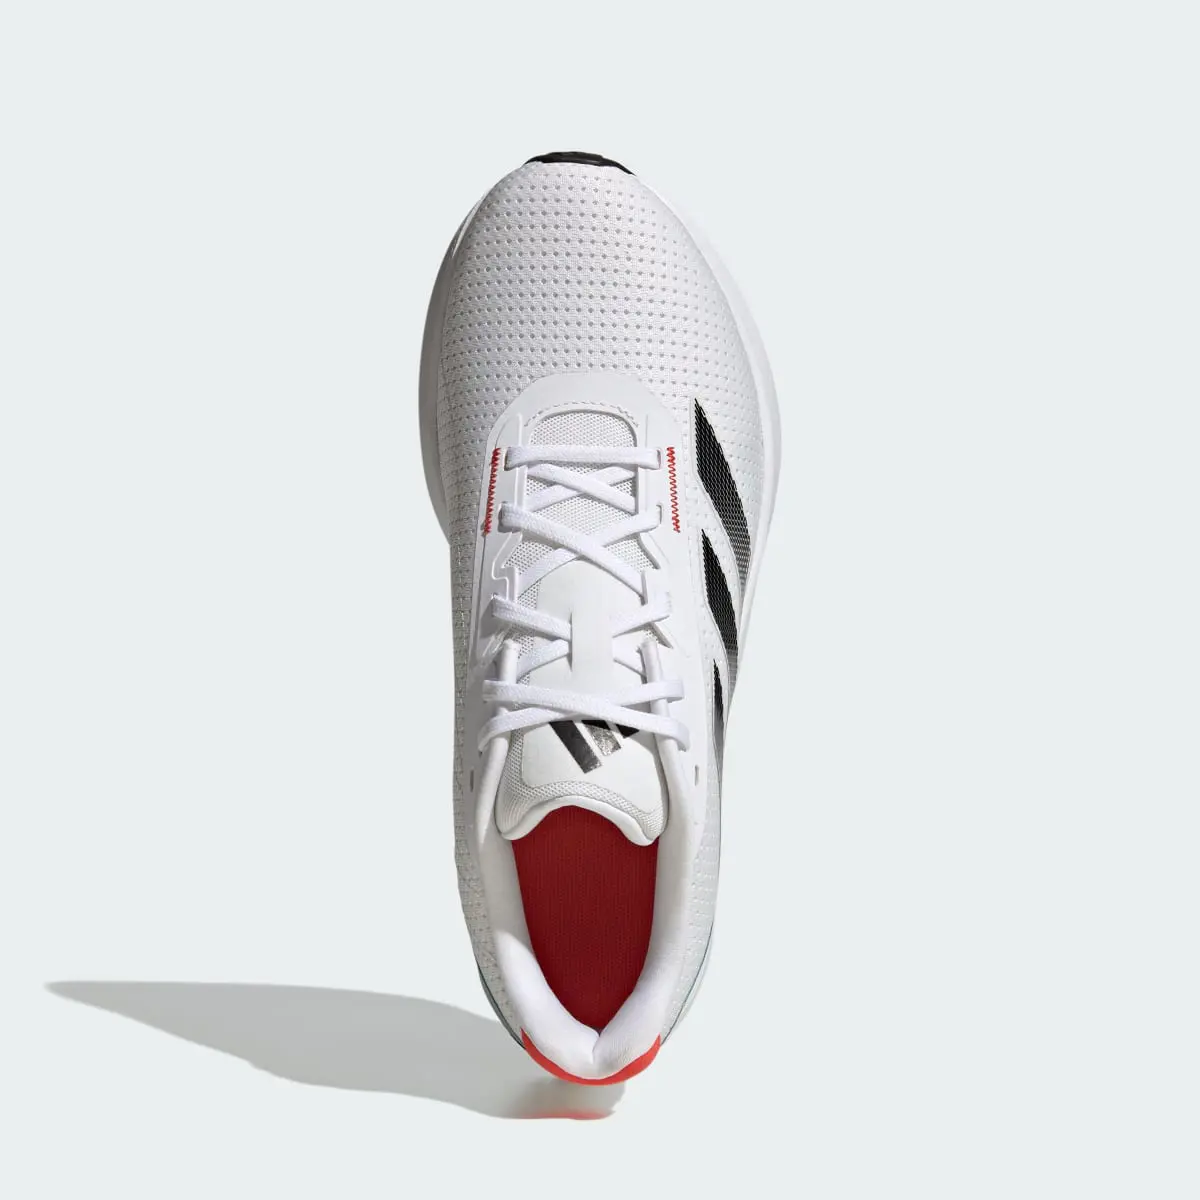 Adidas Duramo SL Ayakkabı. 3